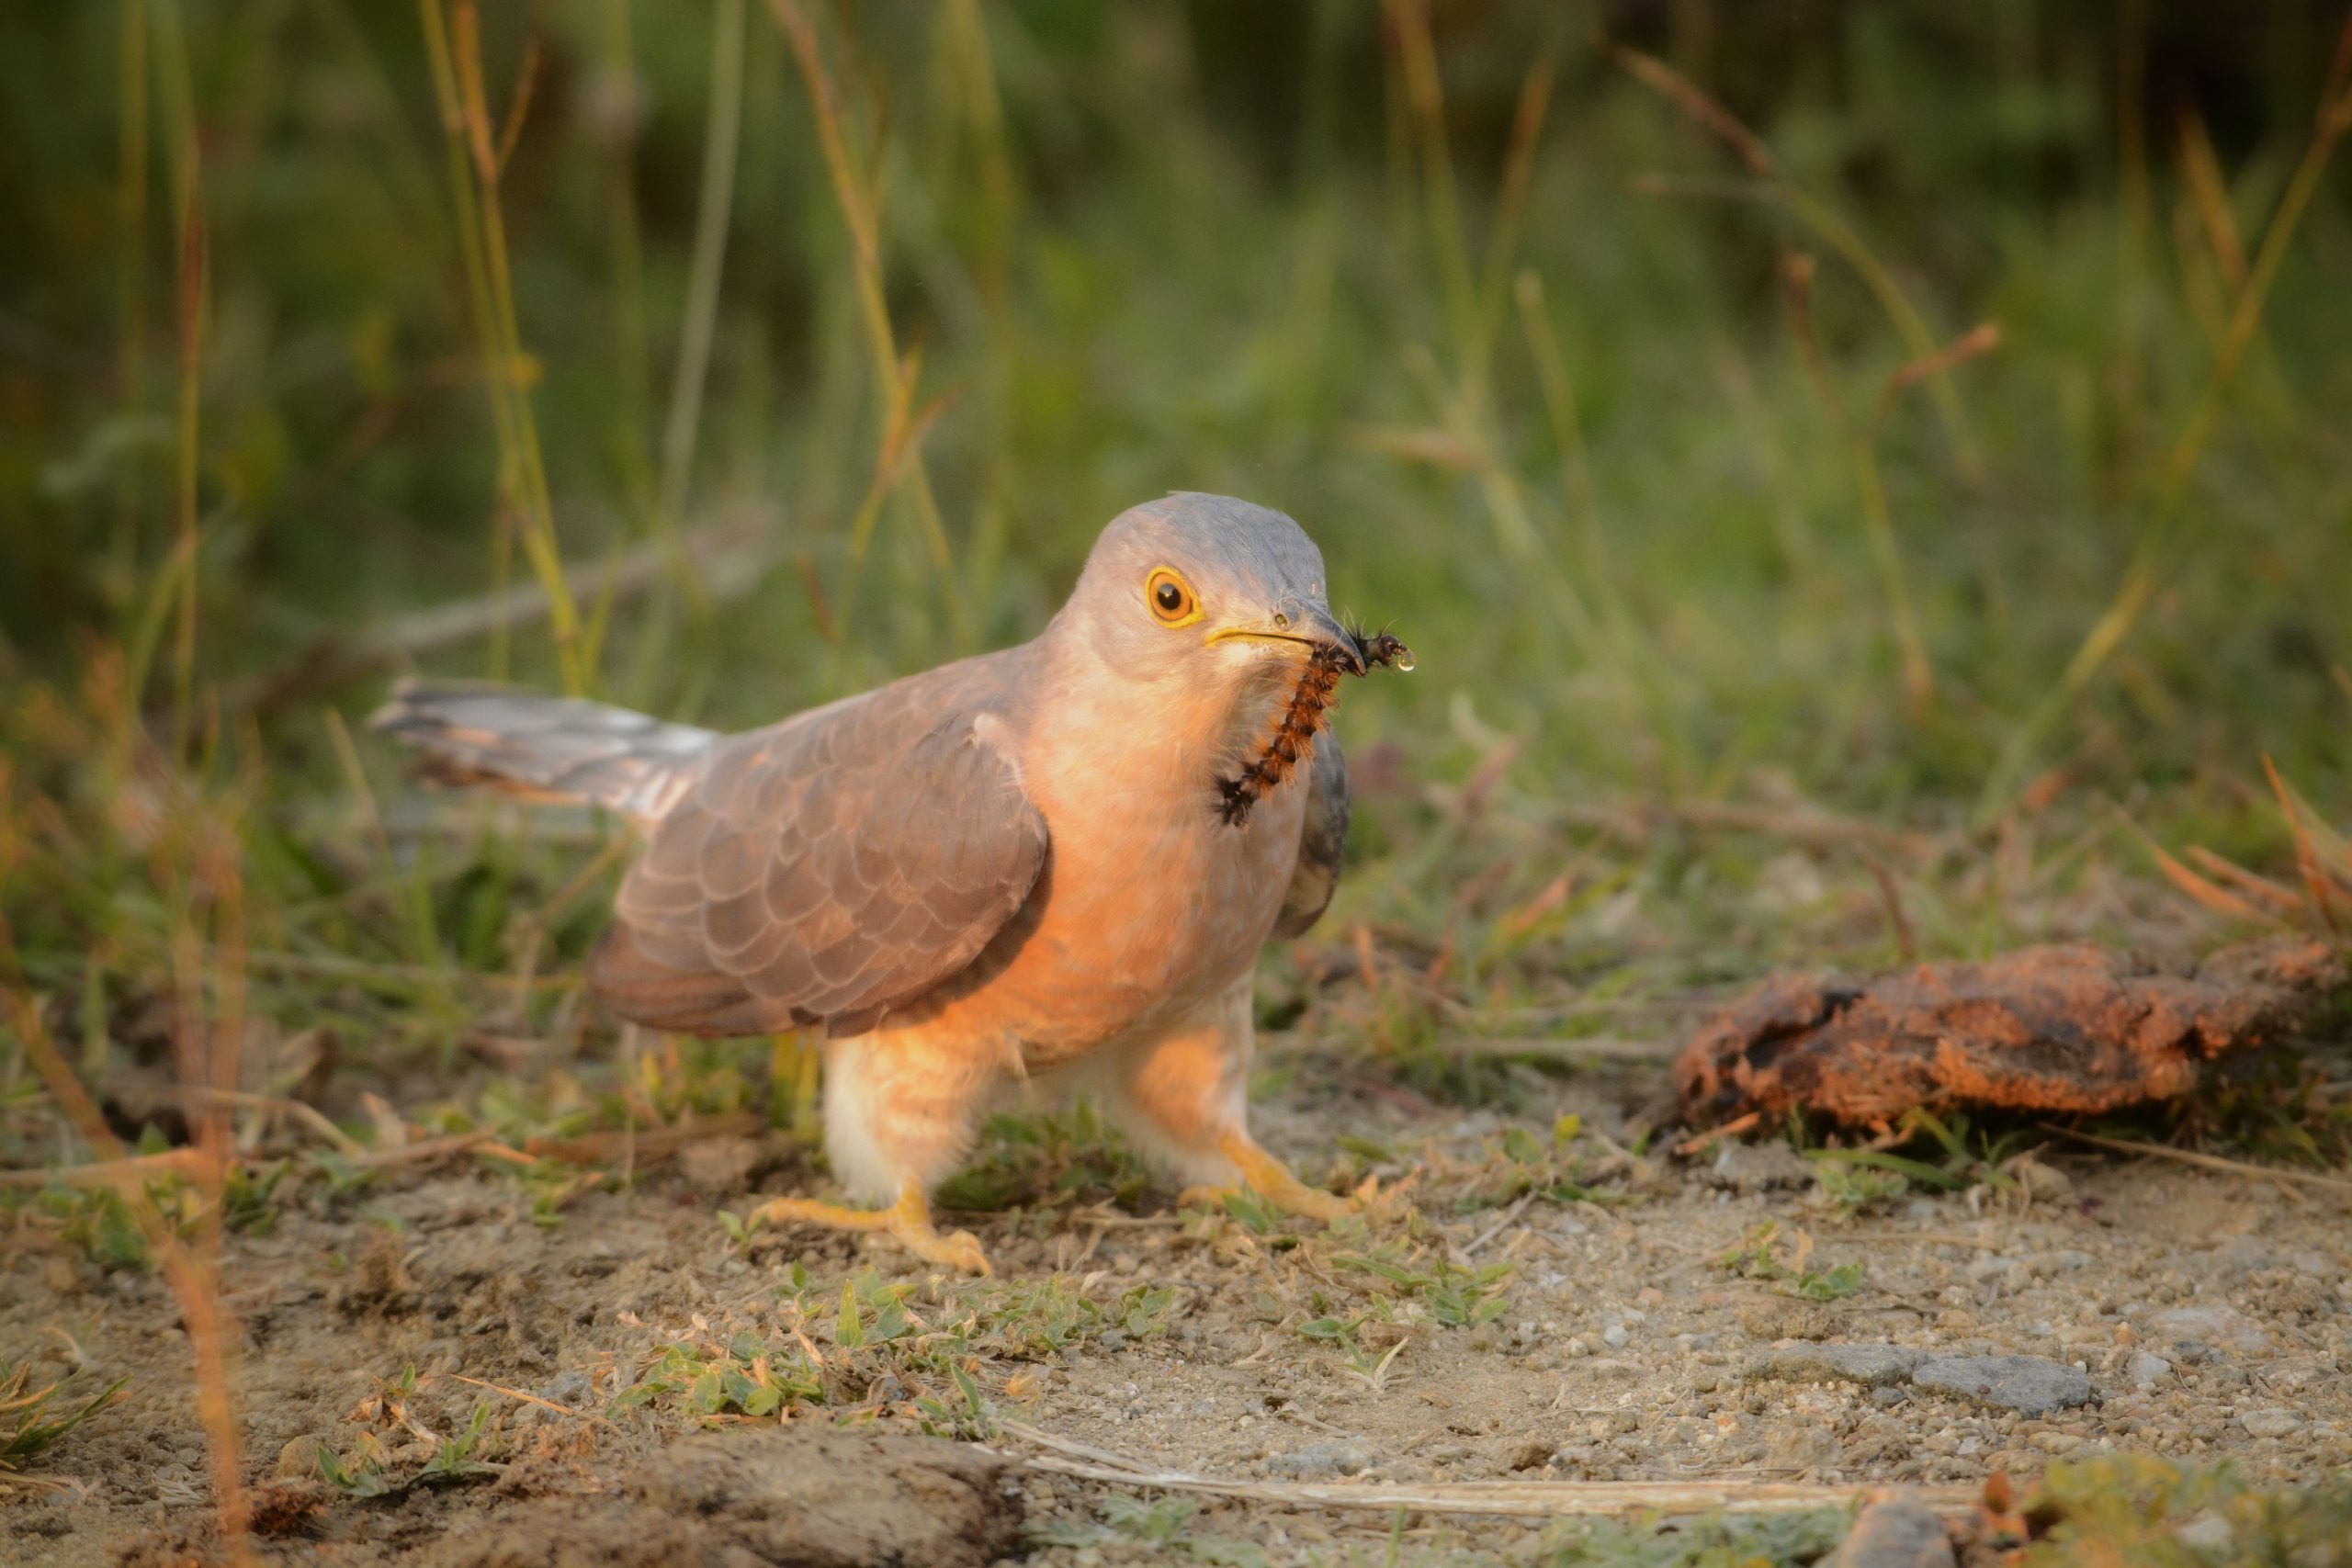 Common Hawk Cuckoo with a kill